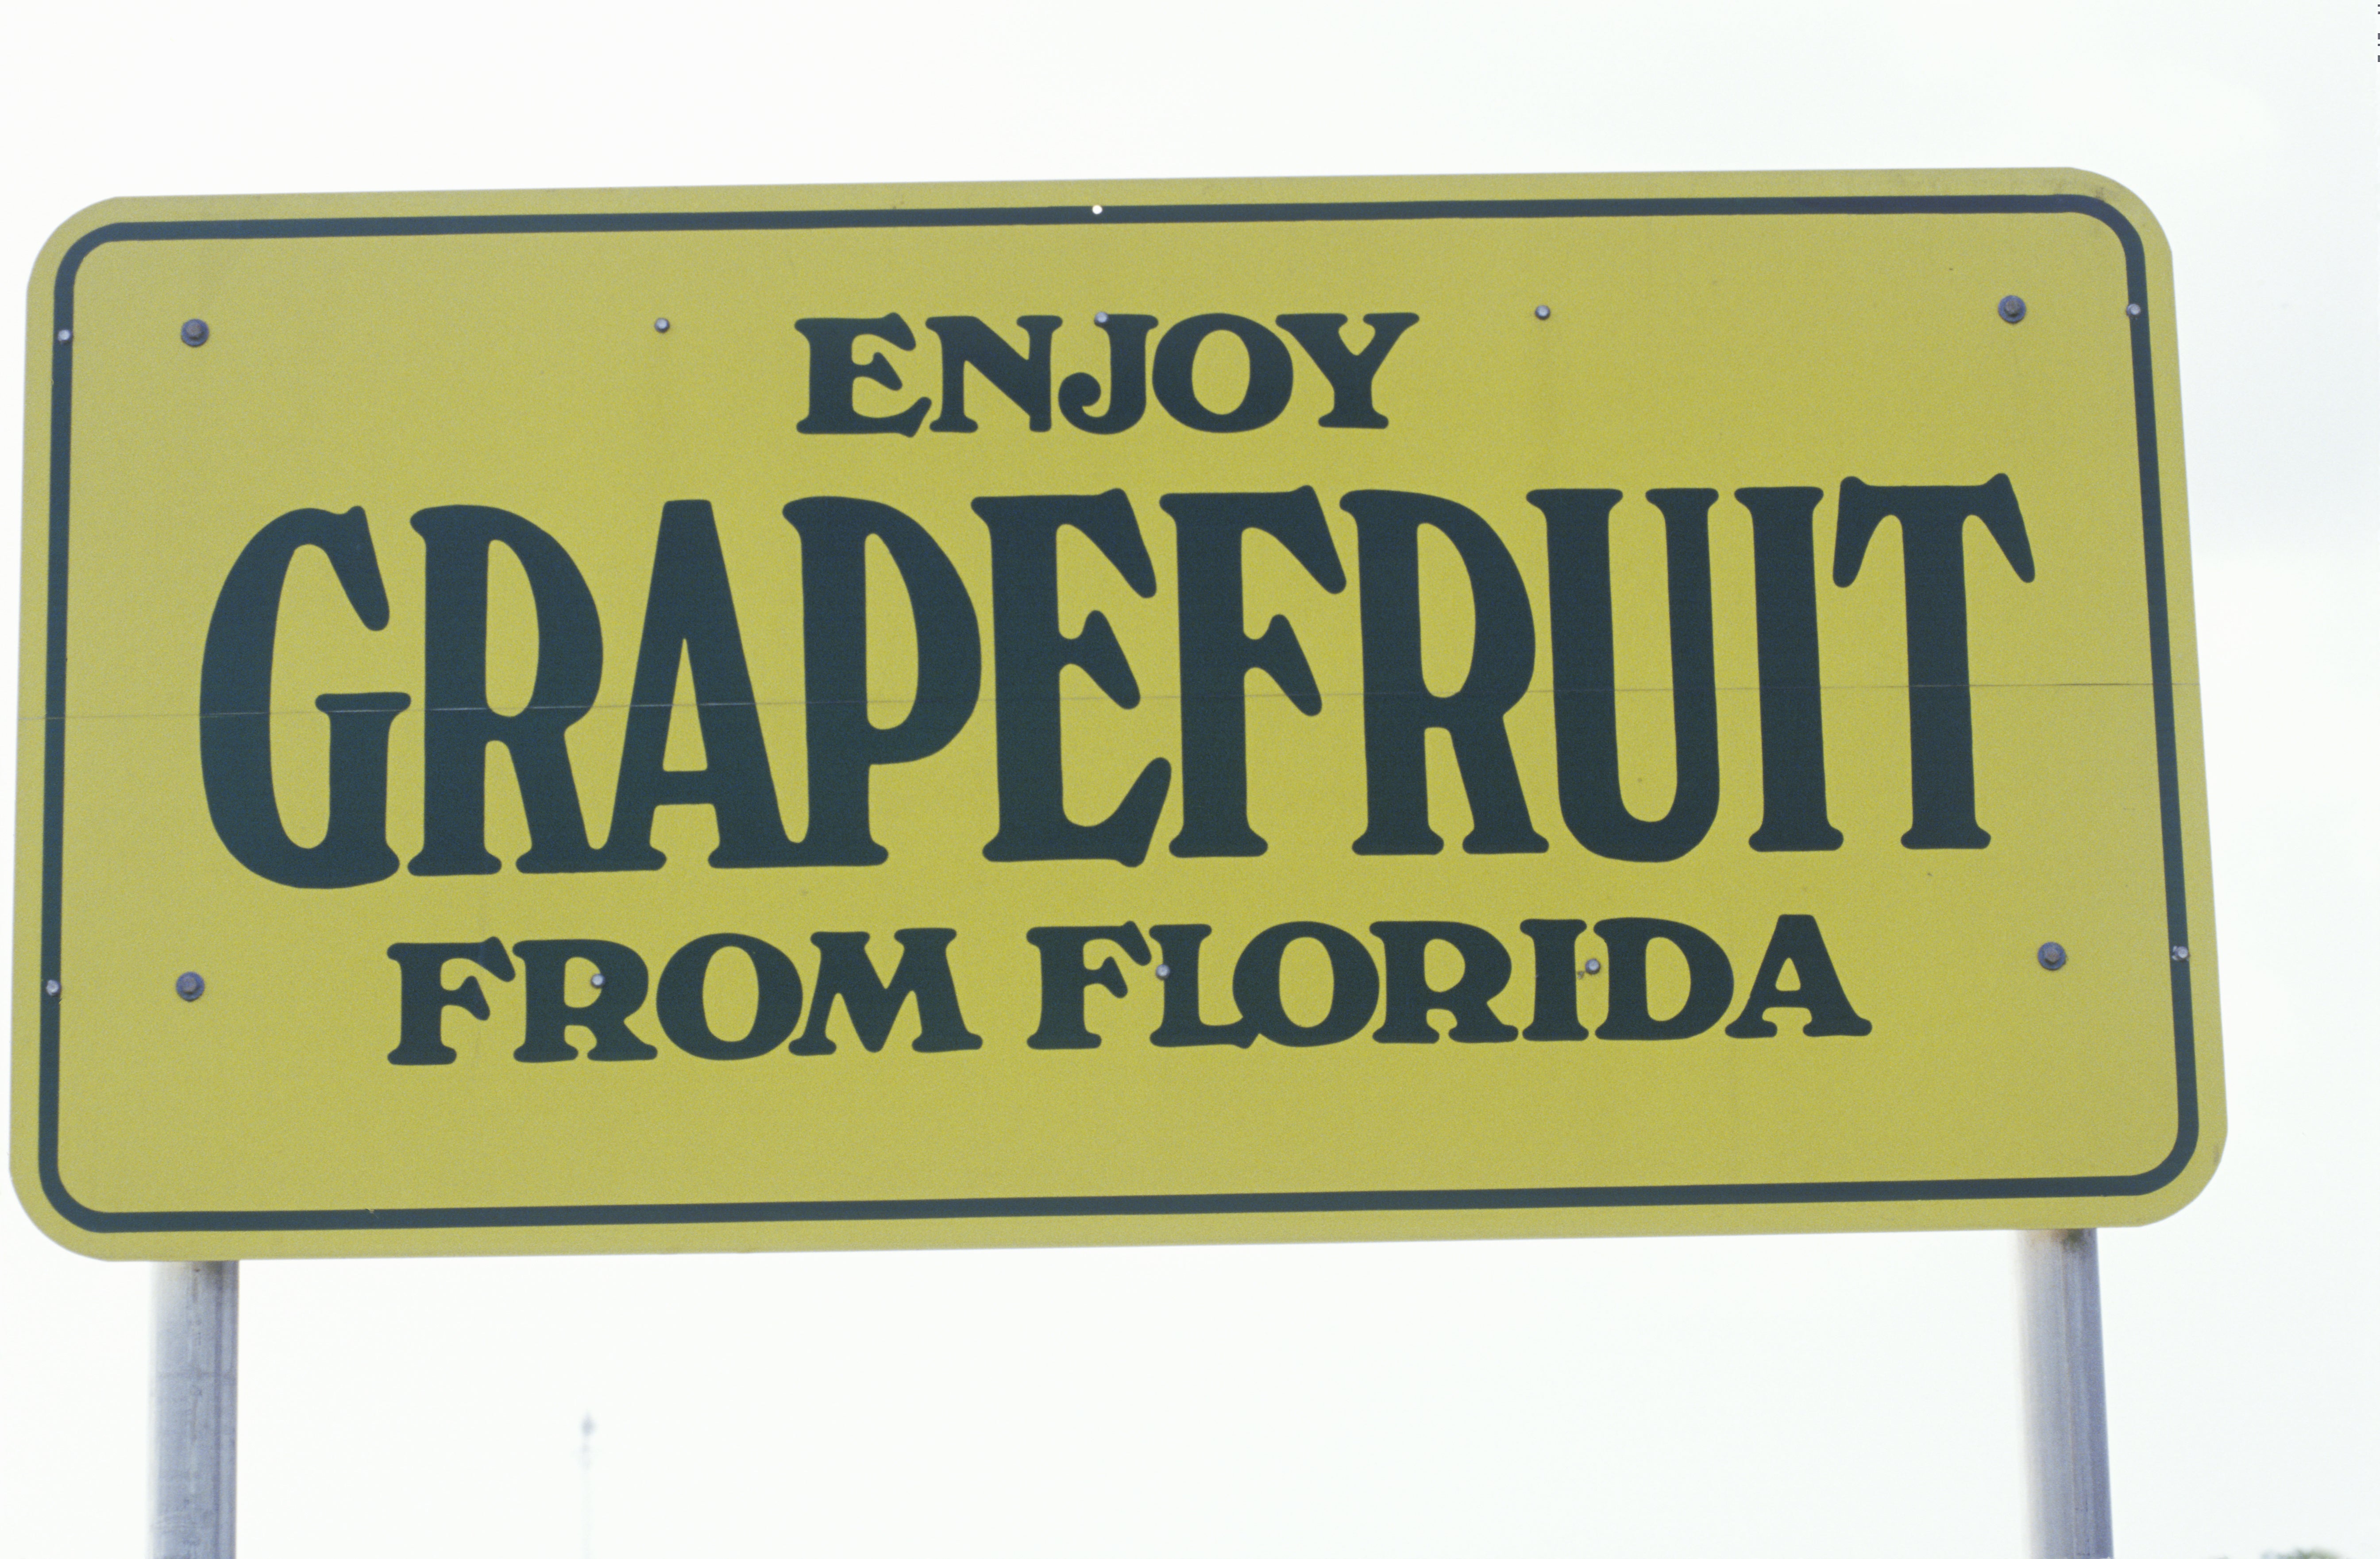 Enjoy Grapefruit from Florida